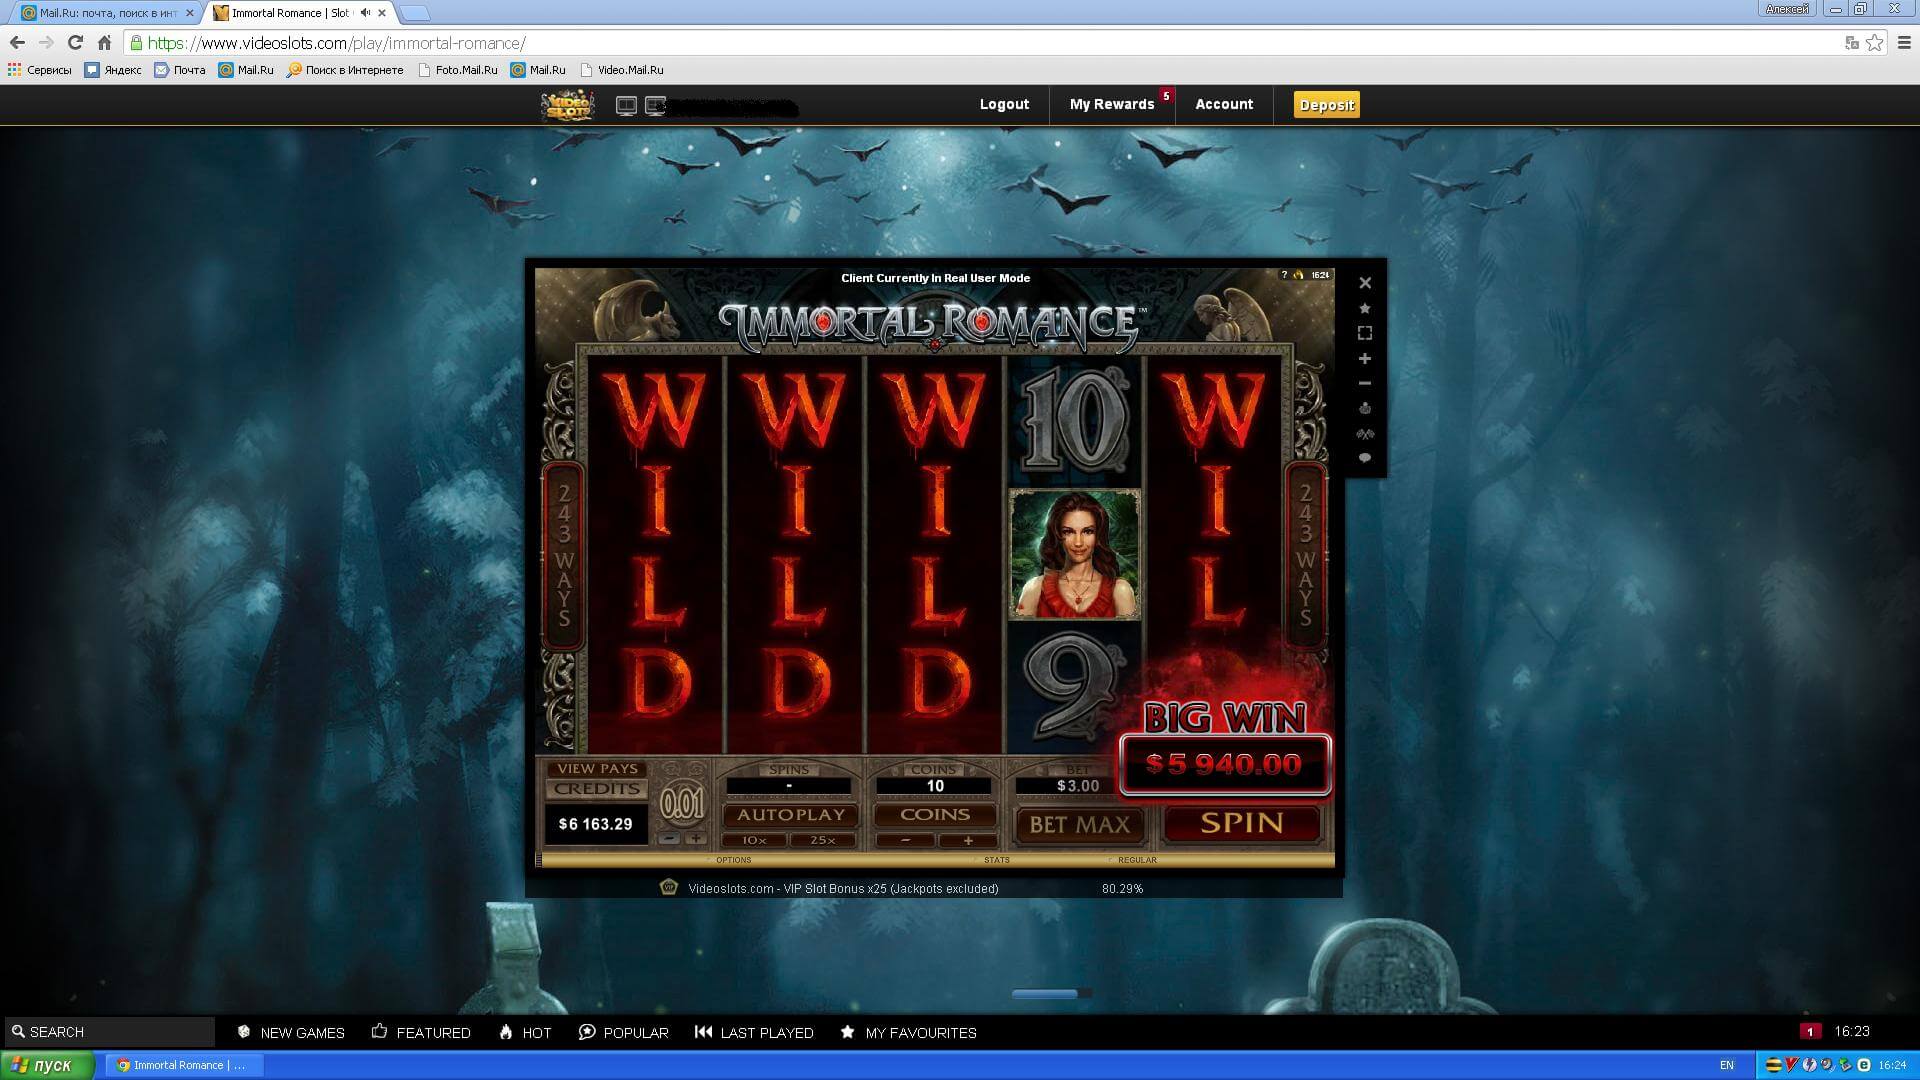 Is lucky creek online casino legit